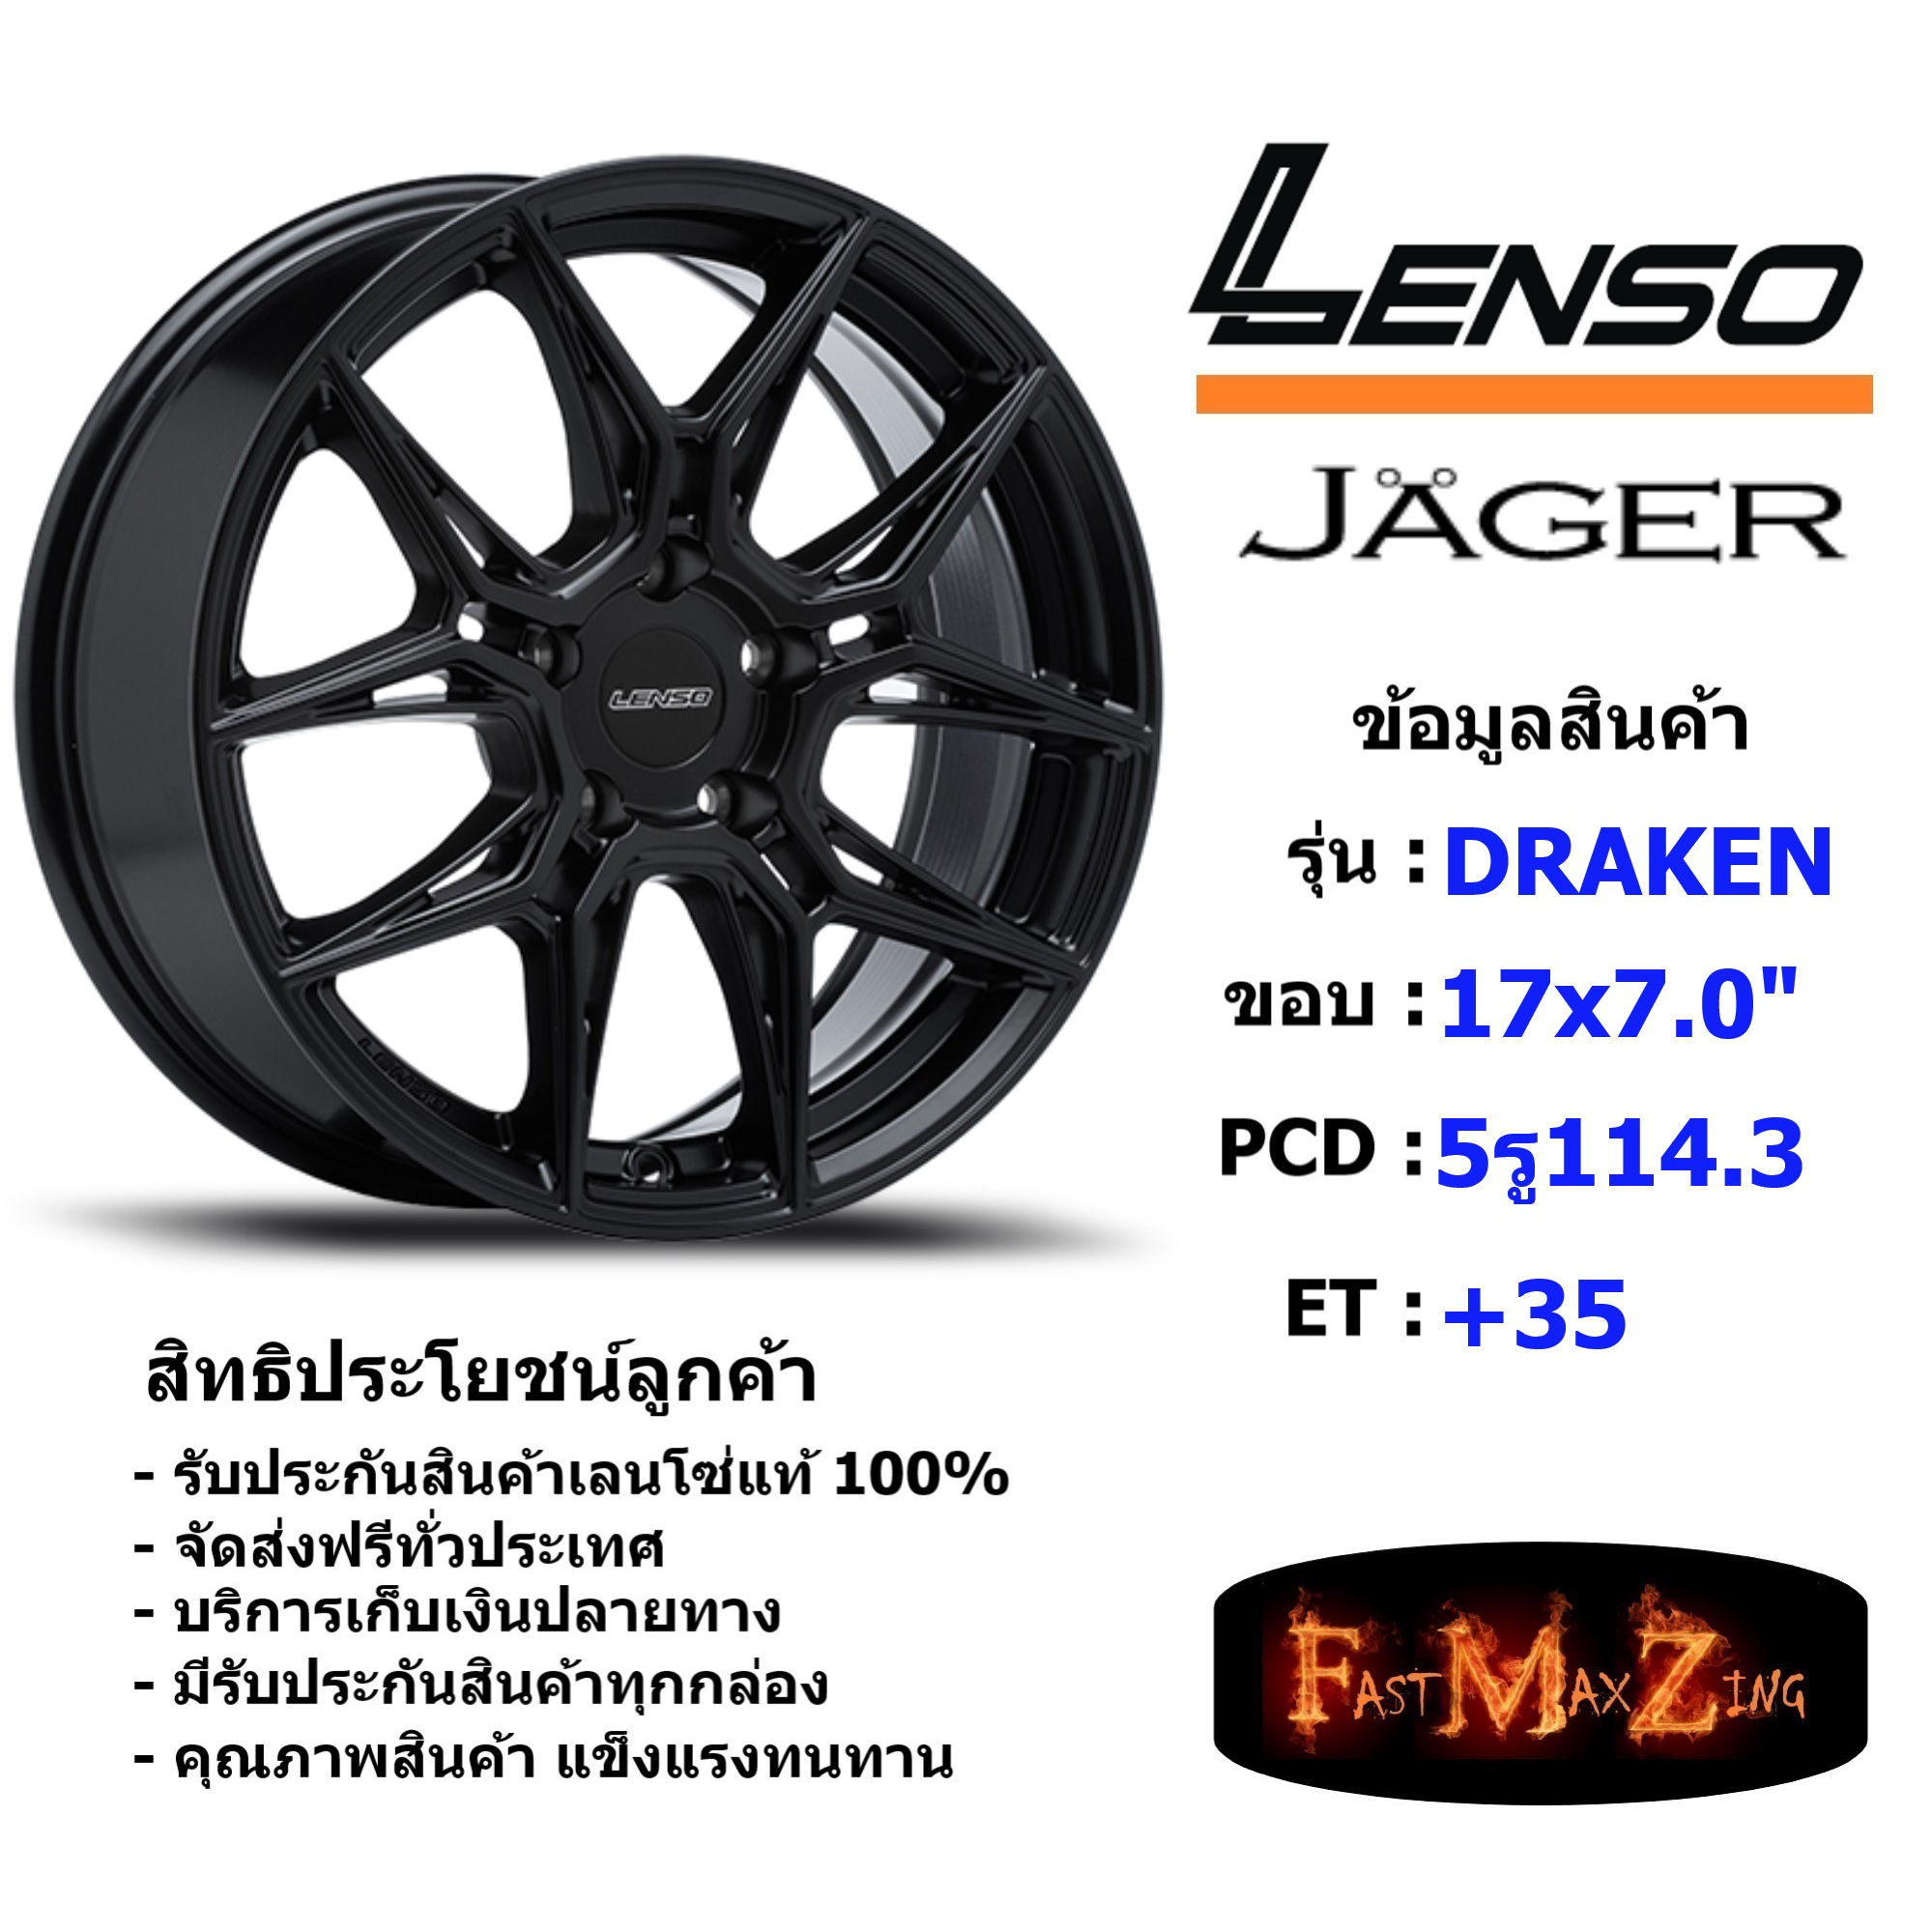 Lenso Wheel JAGER DRAKEN ขอบ 17x7.0" 5รู114.3 ET+35 สีMK แม็กเลนโซ่ ล้อแม็ก เลนโซ่ lenso17 แม็กรถยนต์ขอบ17 แม็กขอบ17